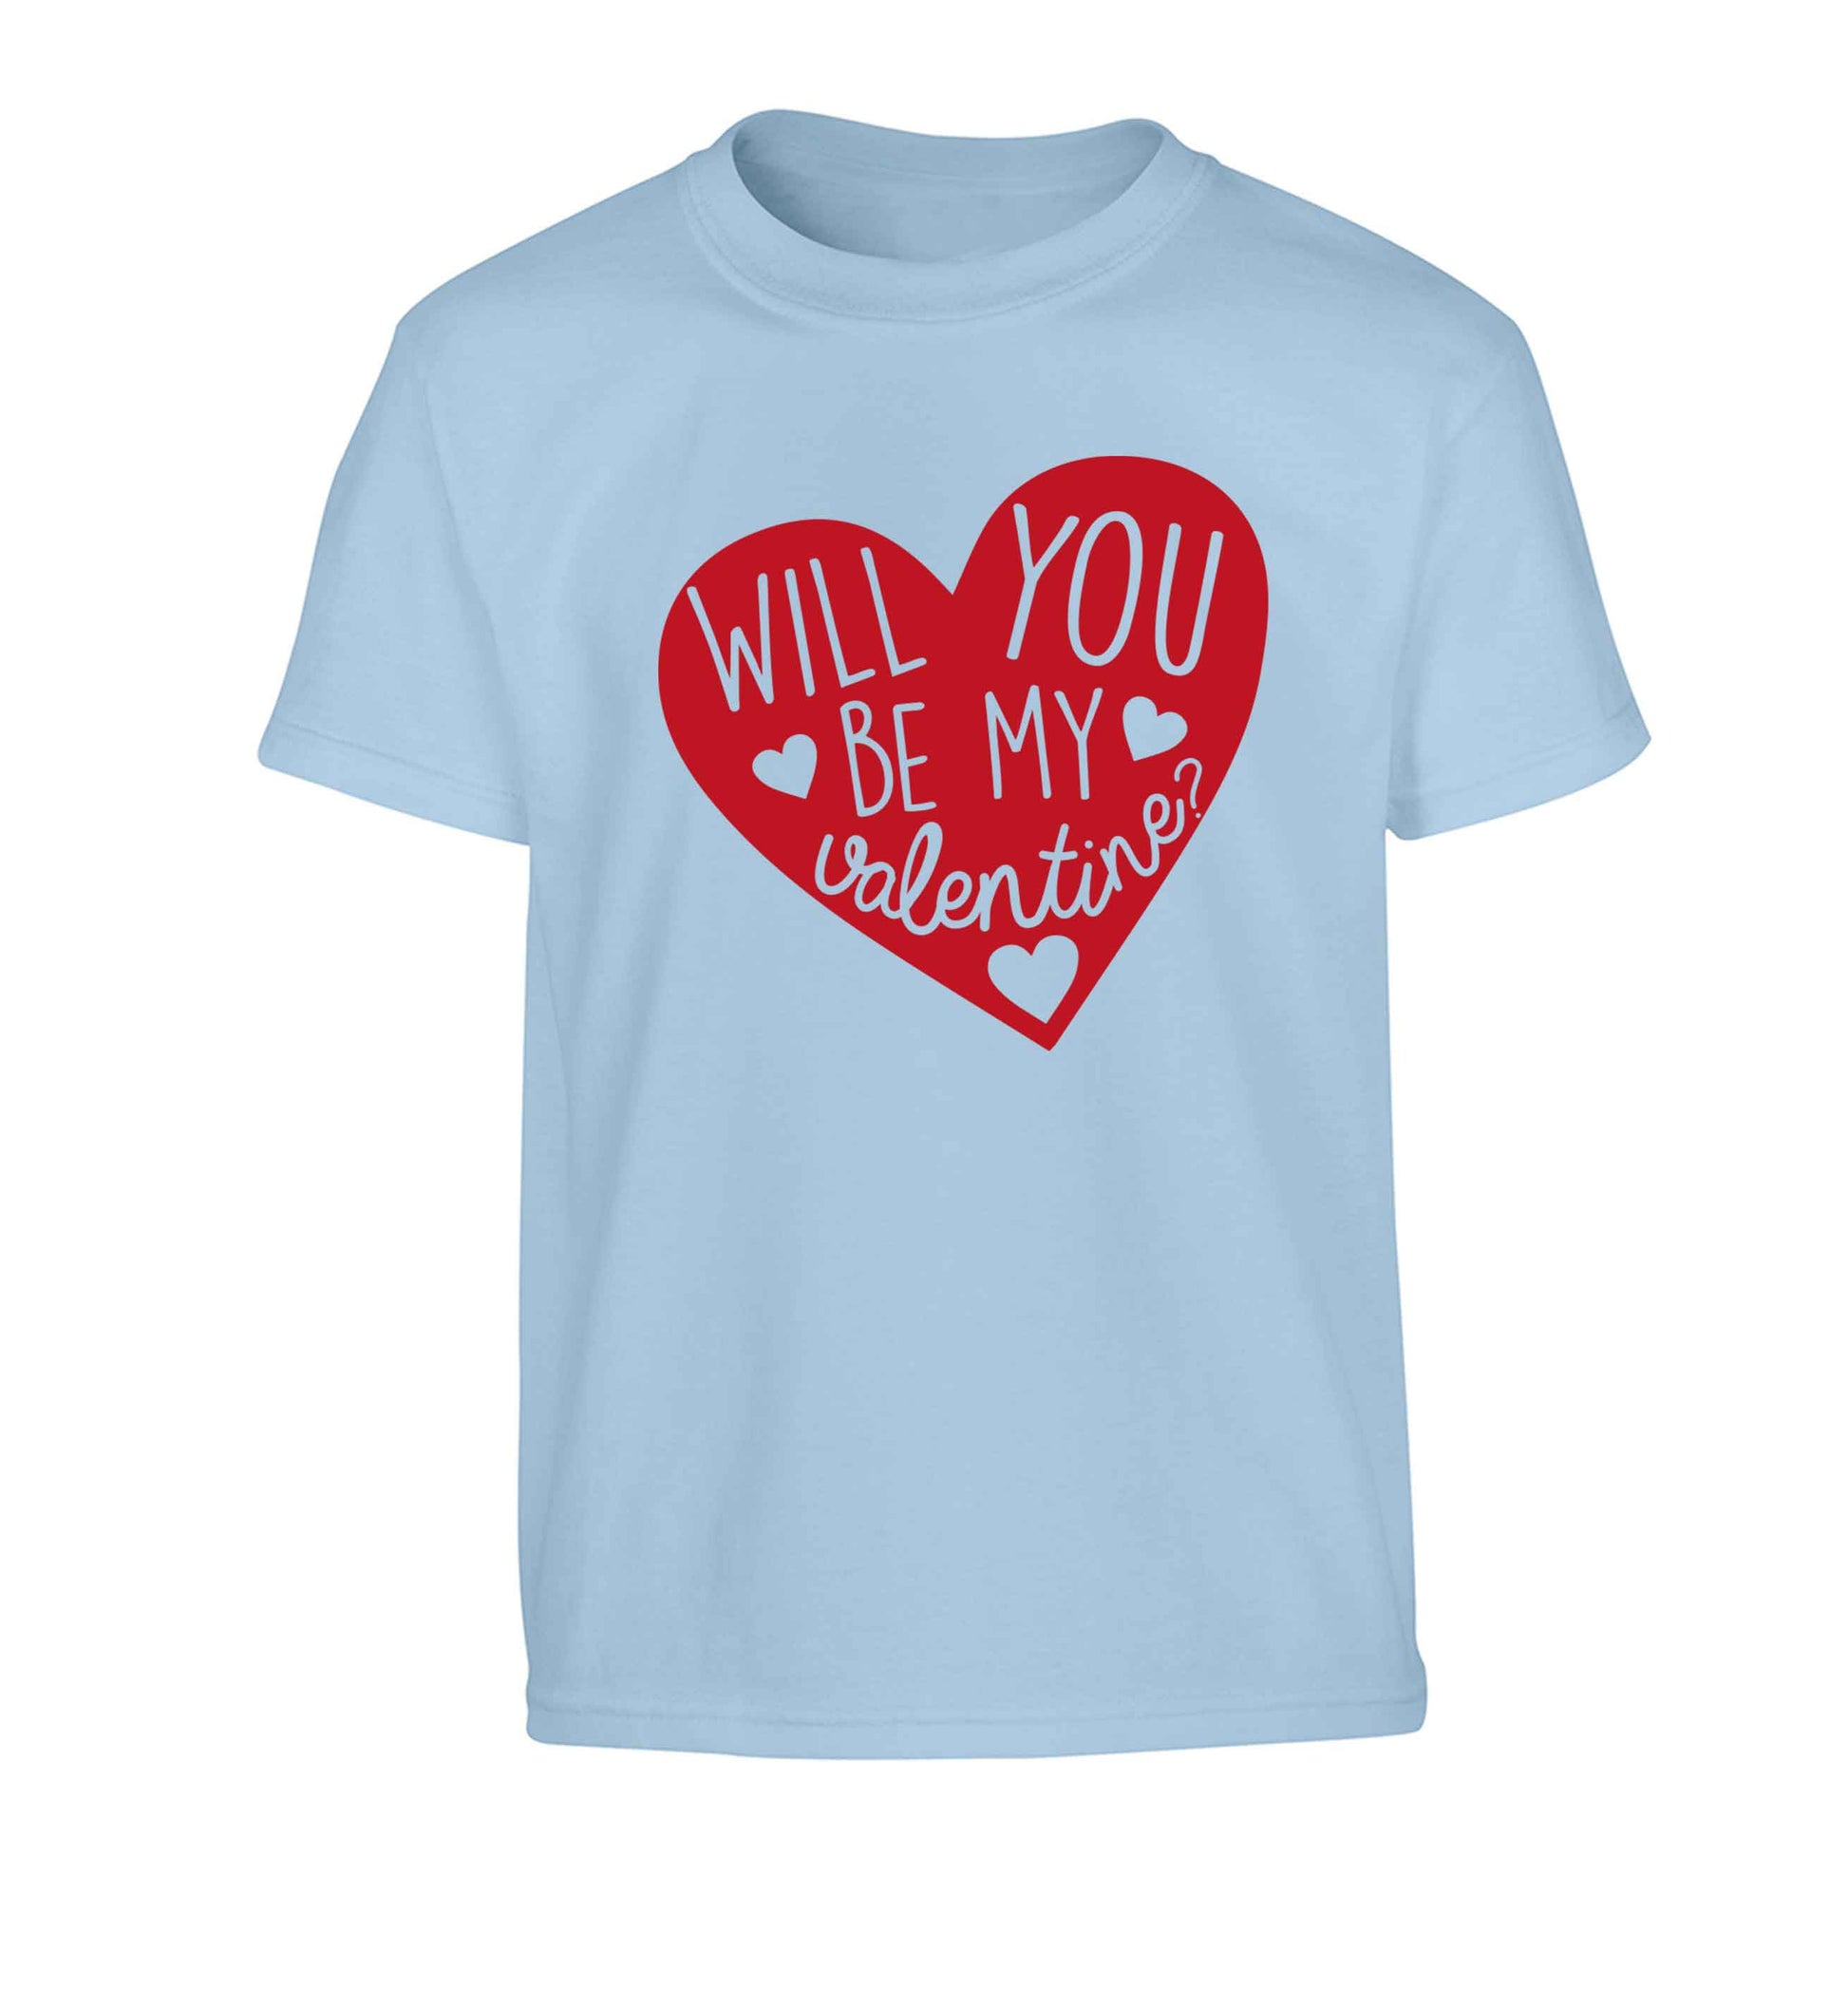 Will you be my valentine? Children's light blue Tshirt 12-13 Years